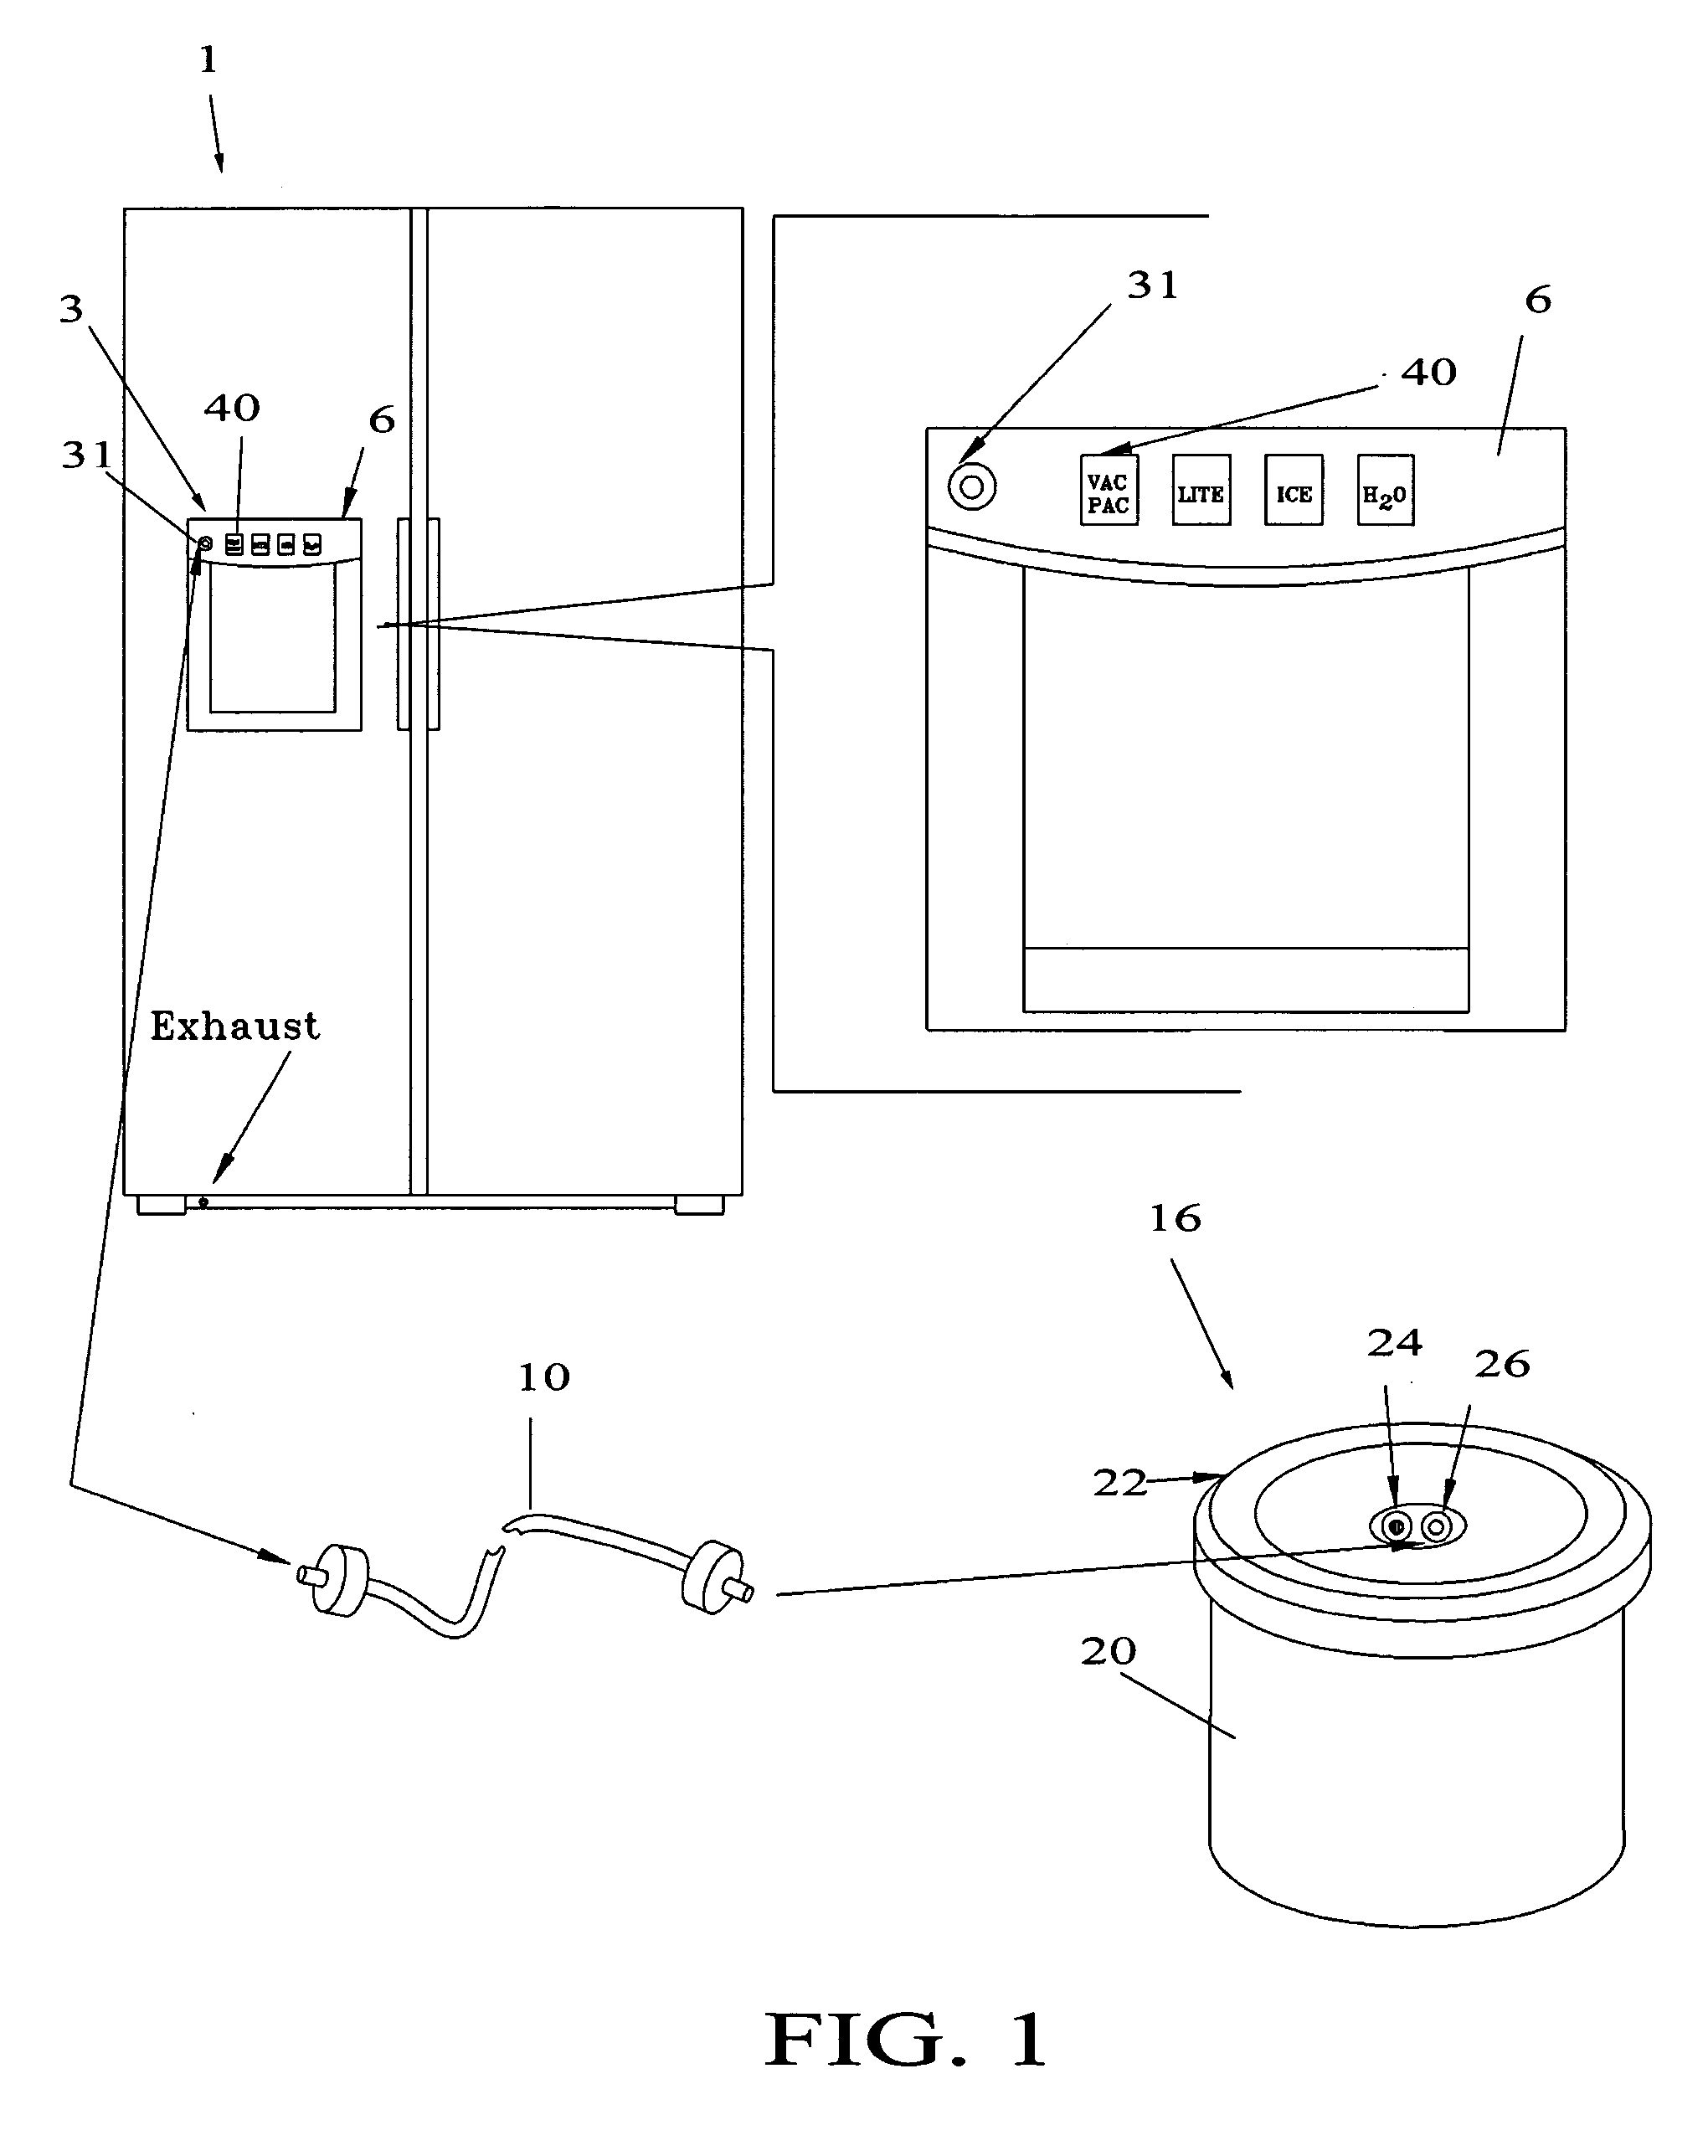 Refrigerator with integral vacuum sealer